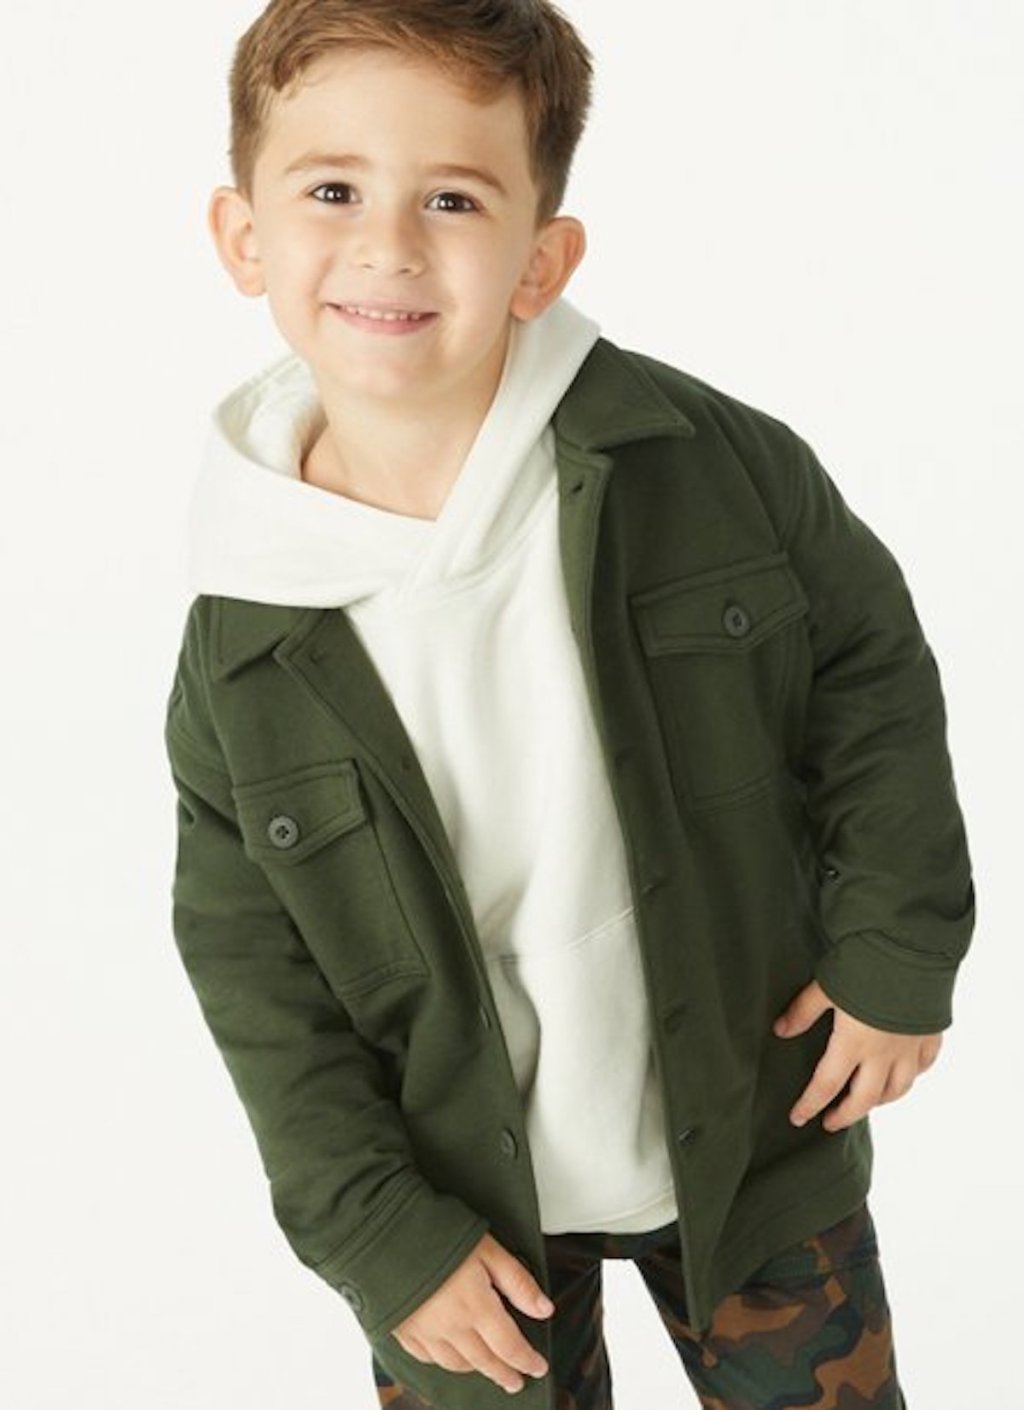 stock photo of boy wearing dark green jacket and white sweatshirt